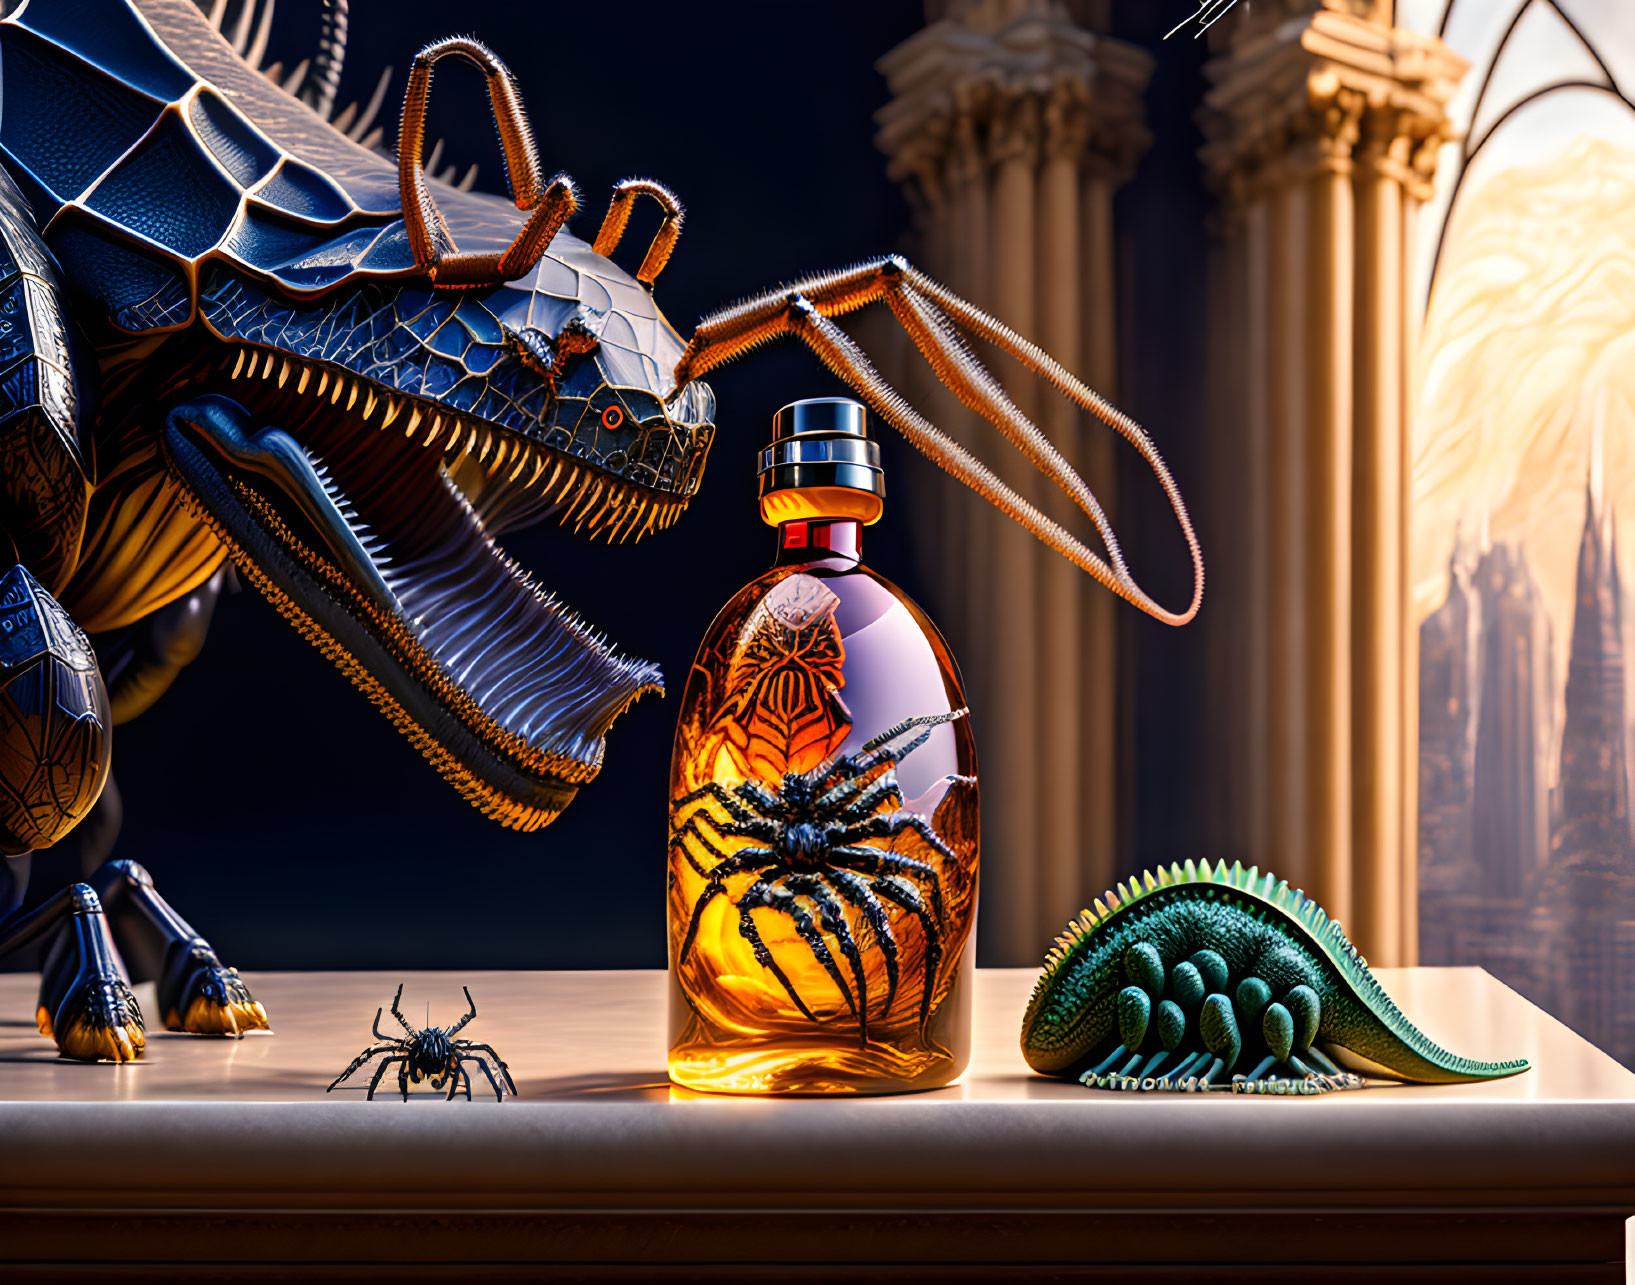 Luxurious perfume bottle with spider design, metallic dragon, and trilobite motif